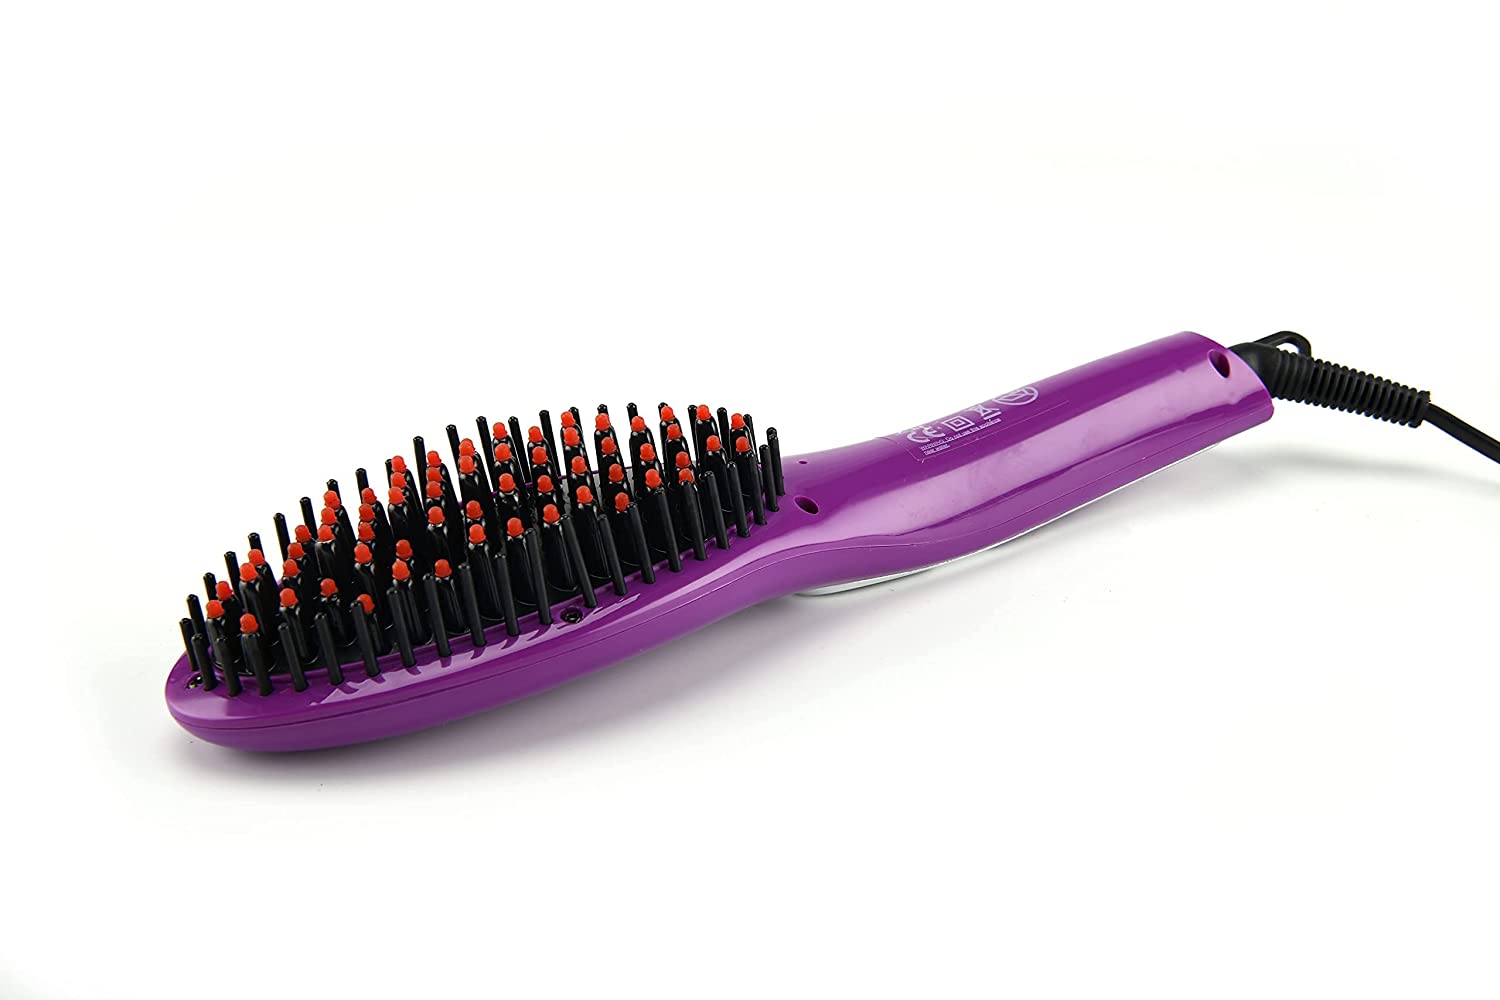 iGRiD Ionic electric comb Brush